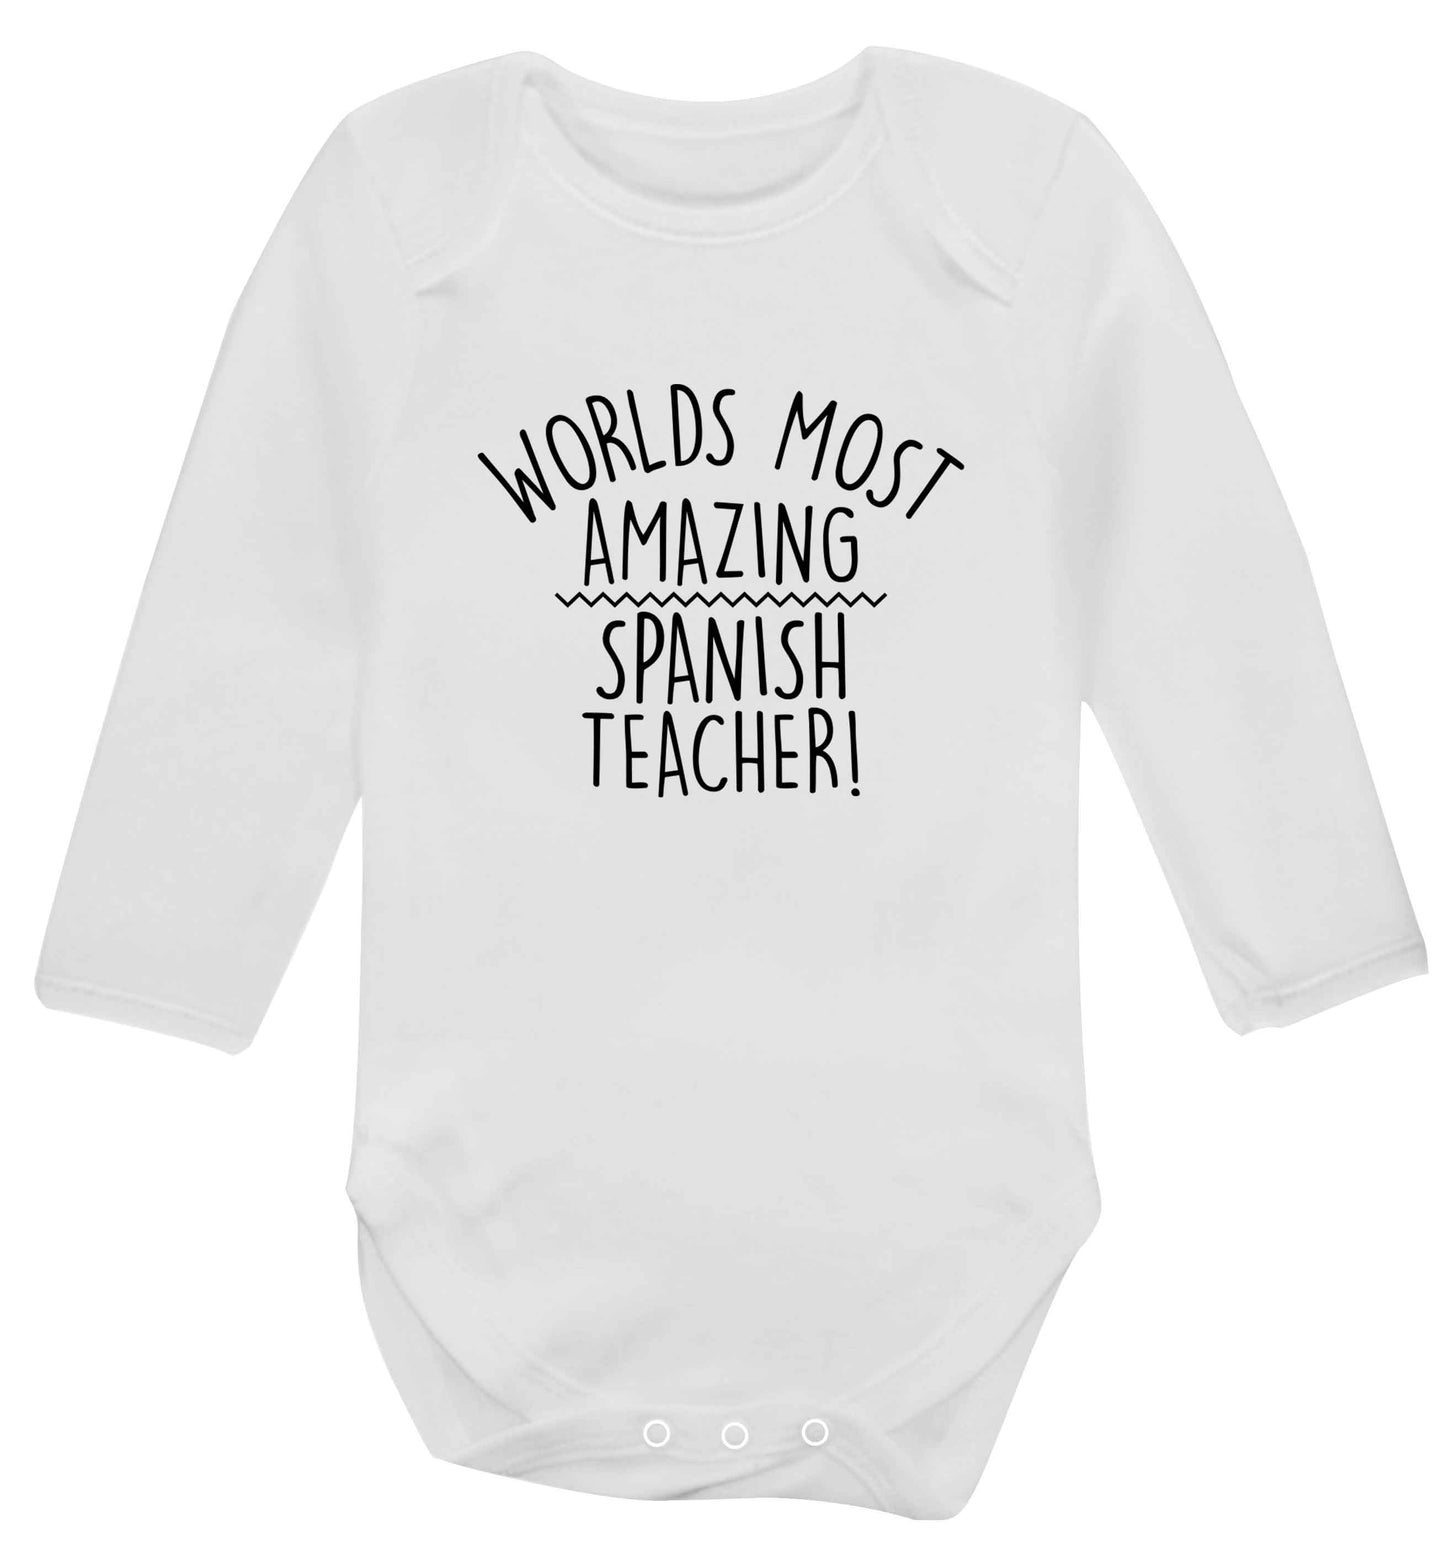 Worlds most amazing Spanish teacher baby vest long sleeved white 6-12 months